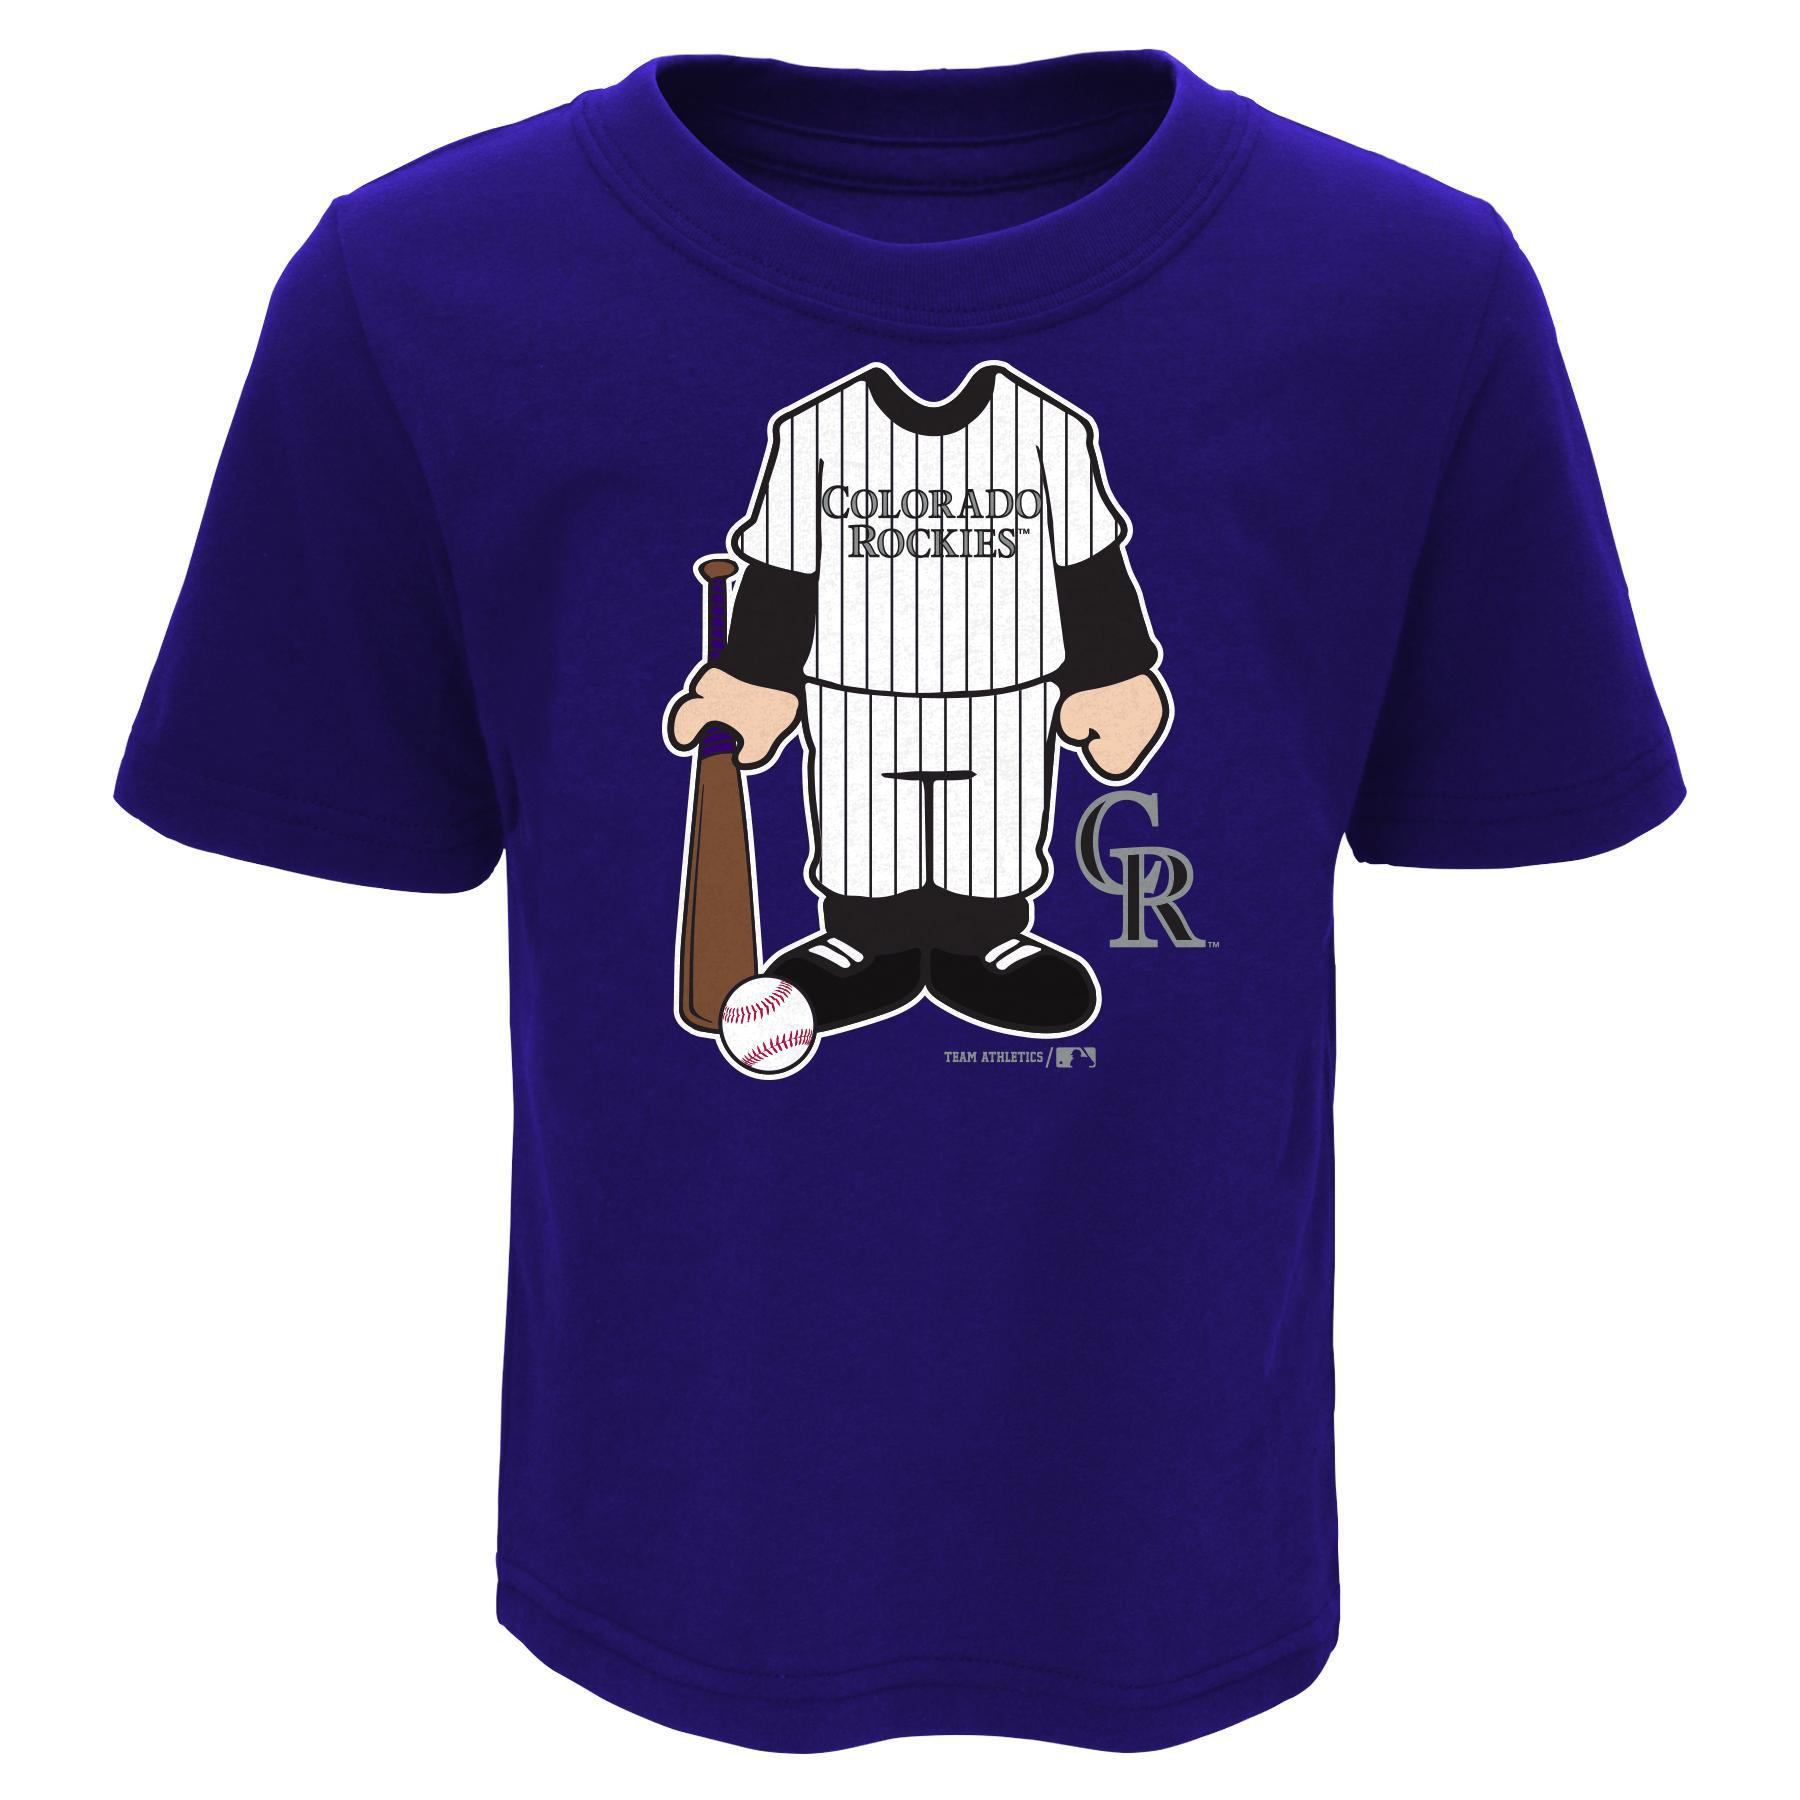 MLB Toddler Boys' T-Shirt - Colorado Rockies